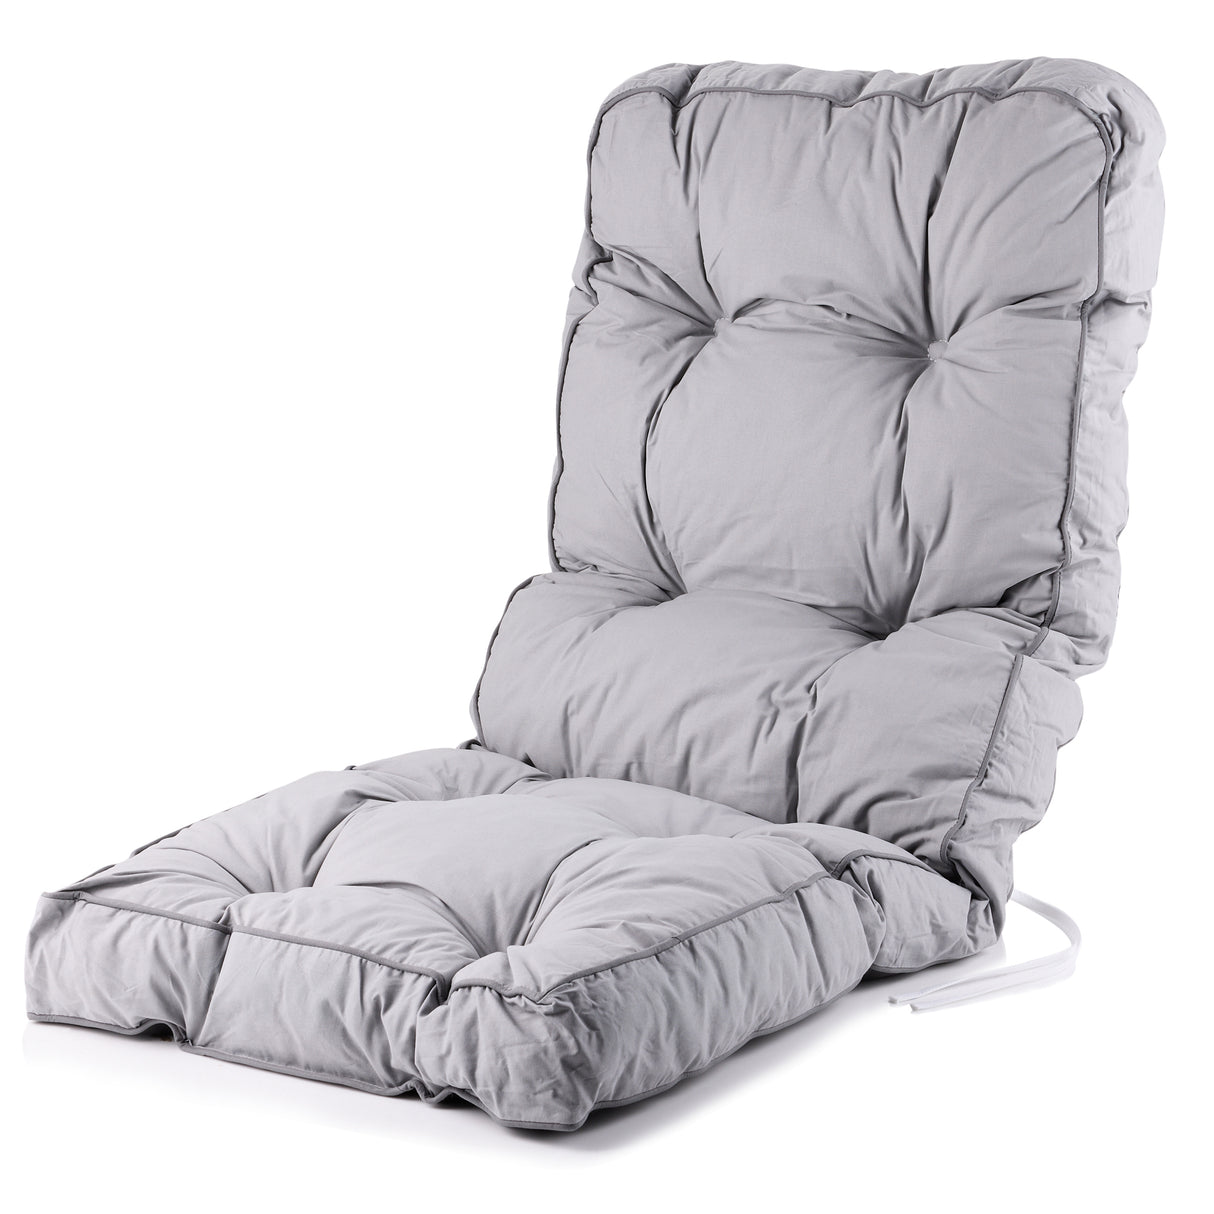 Alfresia Garden Chair Cushions - Classic Recliner Style